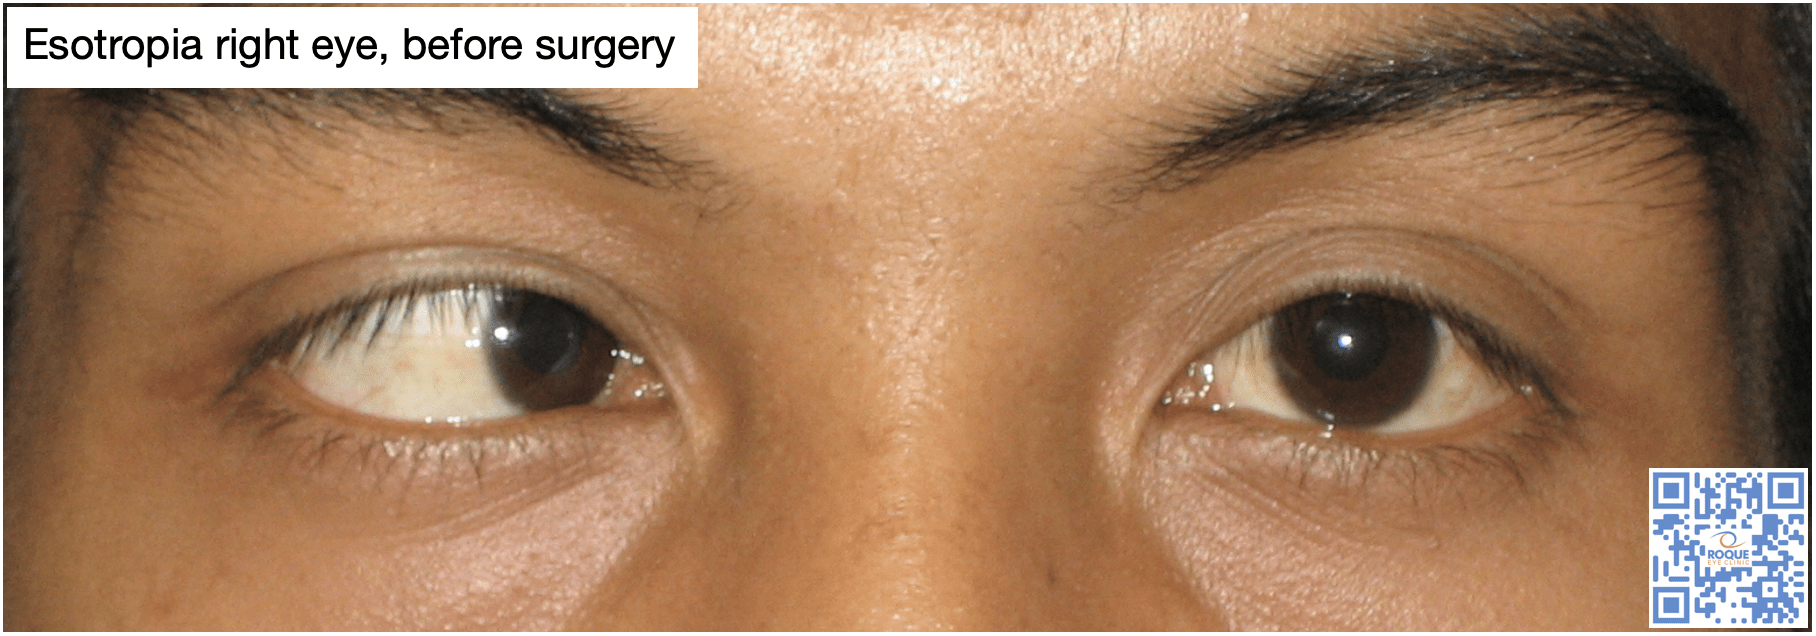 Esotropia right eye, before surgery